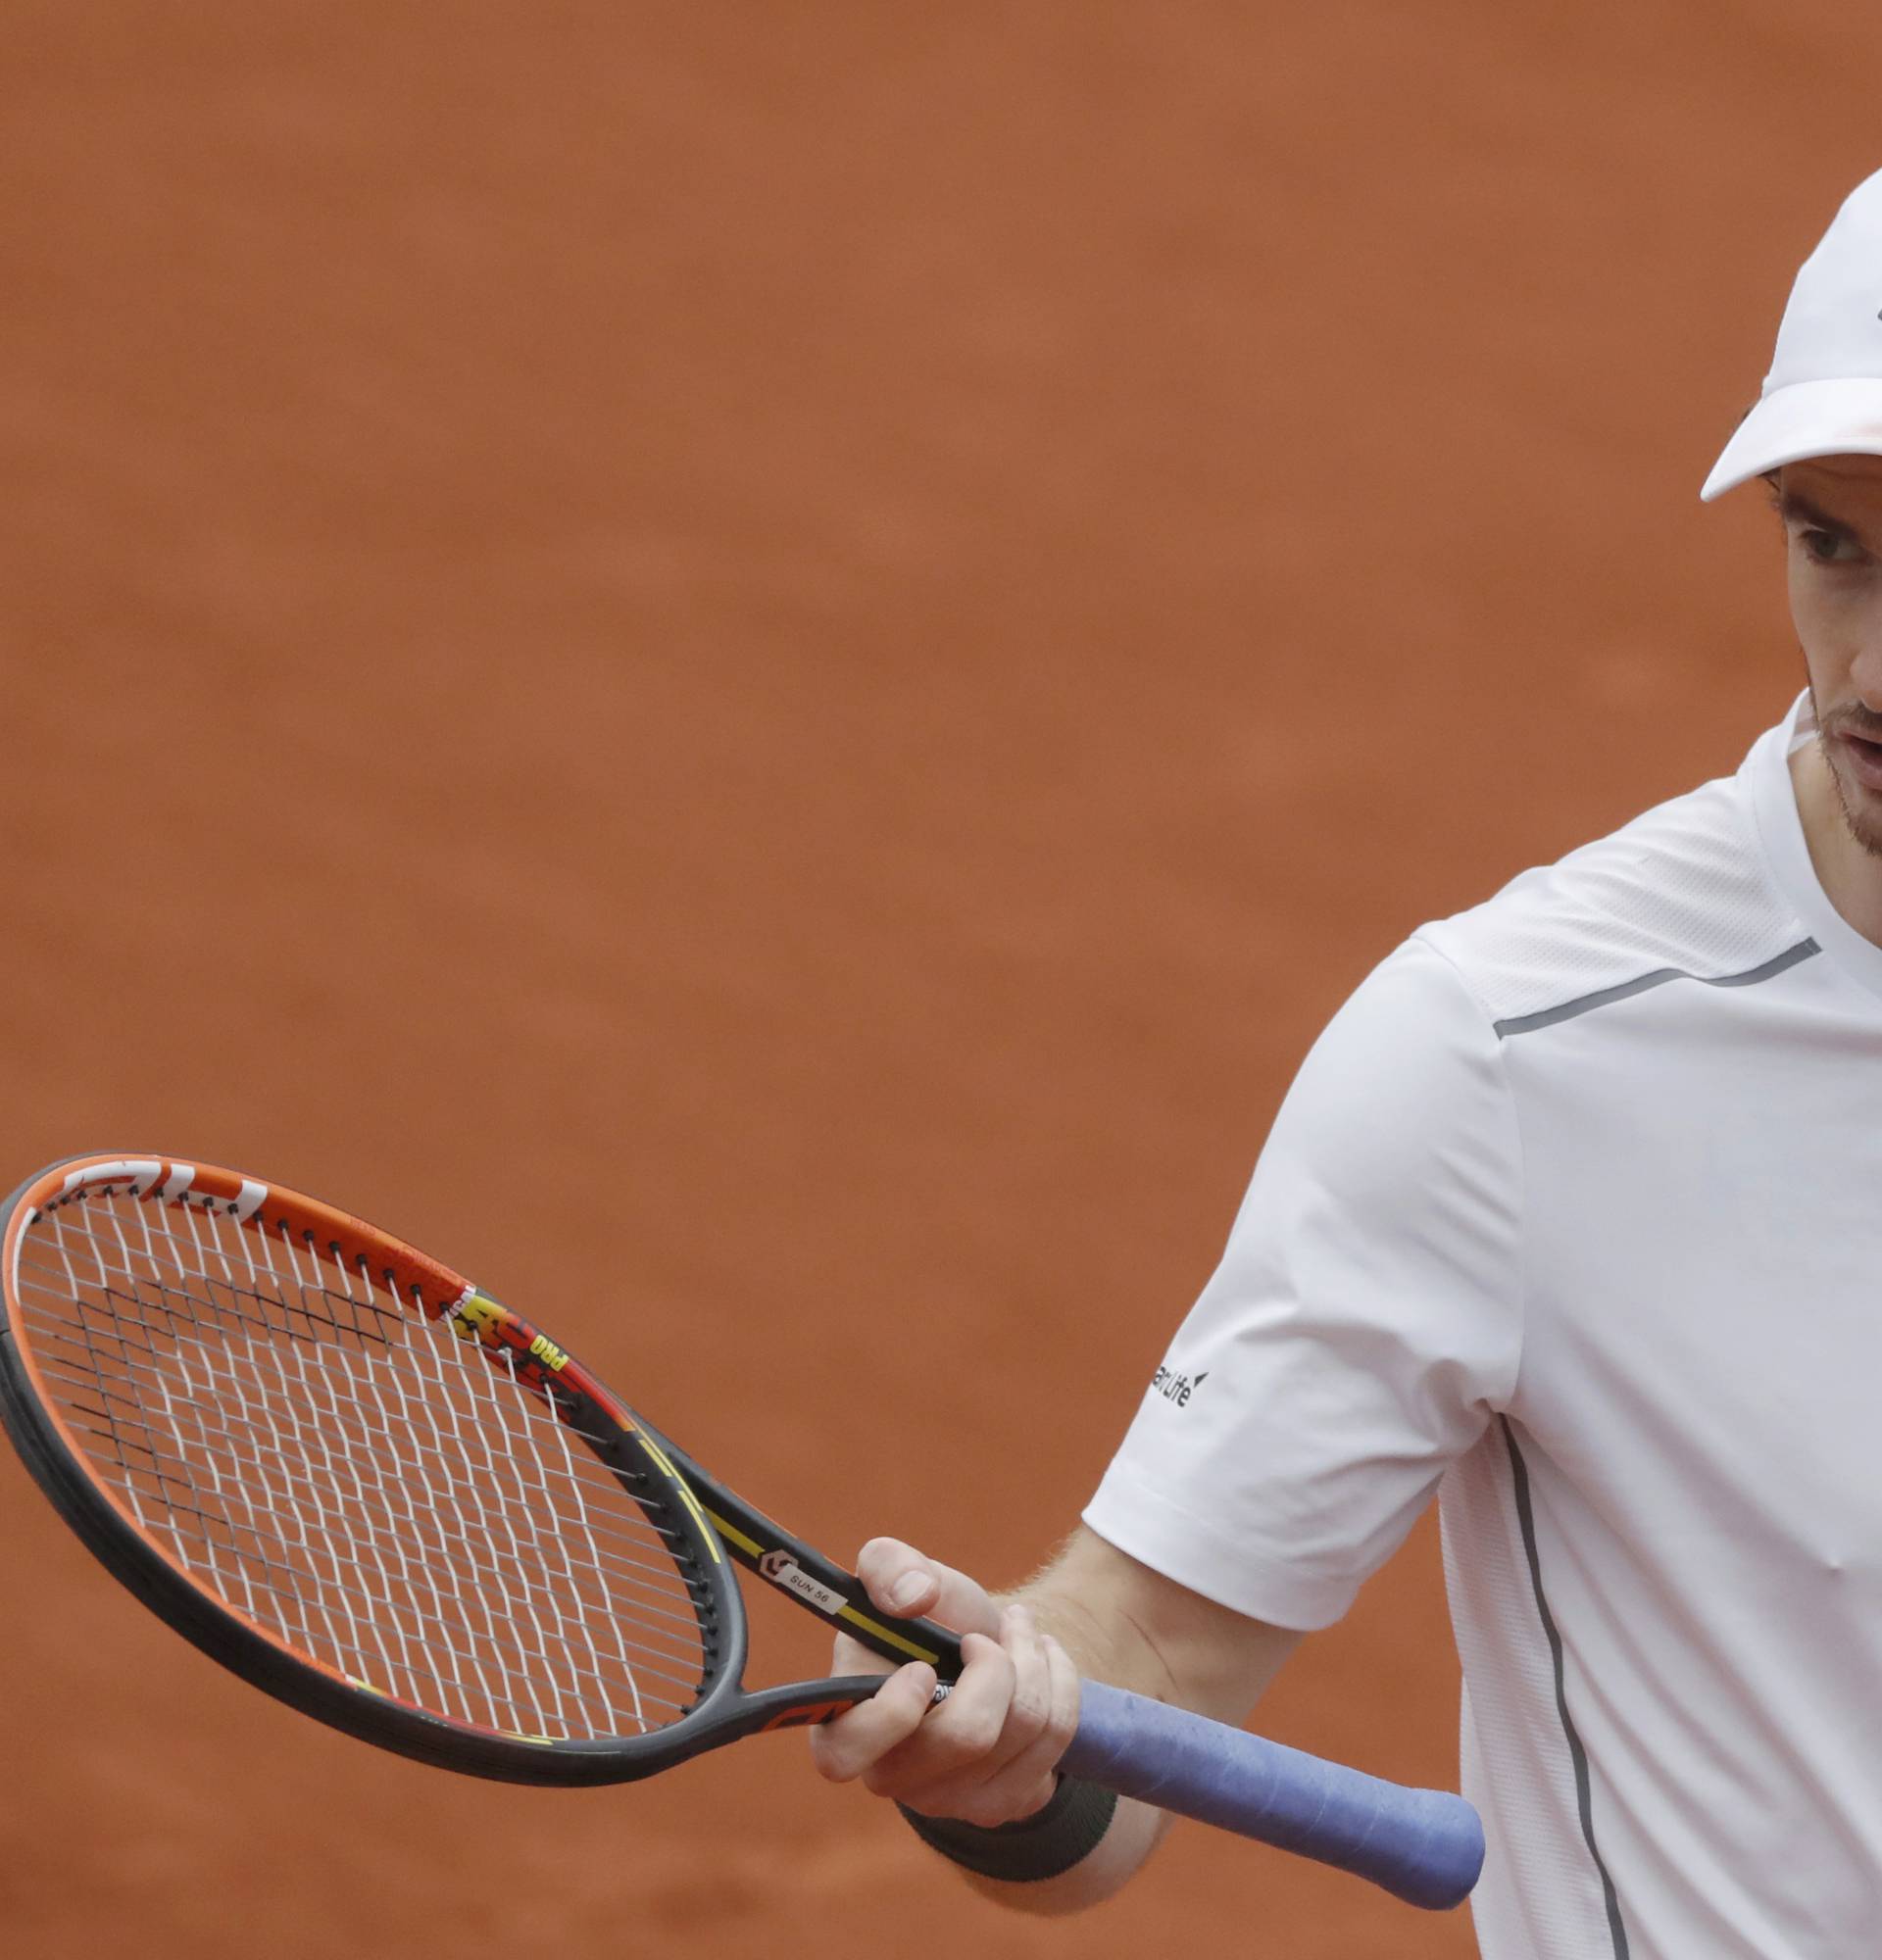 Tennis - French Open Men's Singles Final match - Roland Garros - Novak Djokovic of Serbia v Andy Murray of Britain